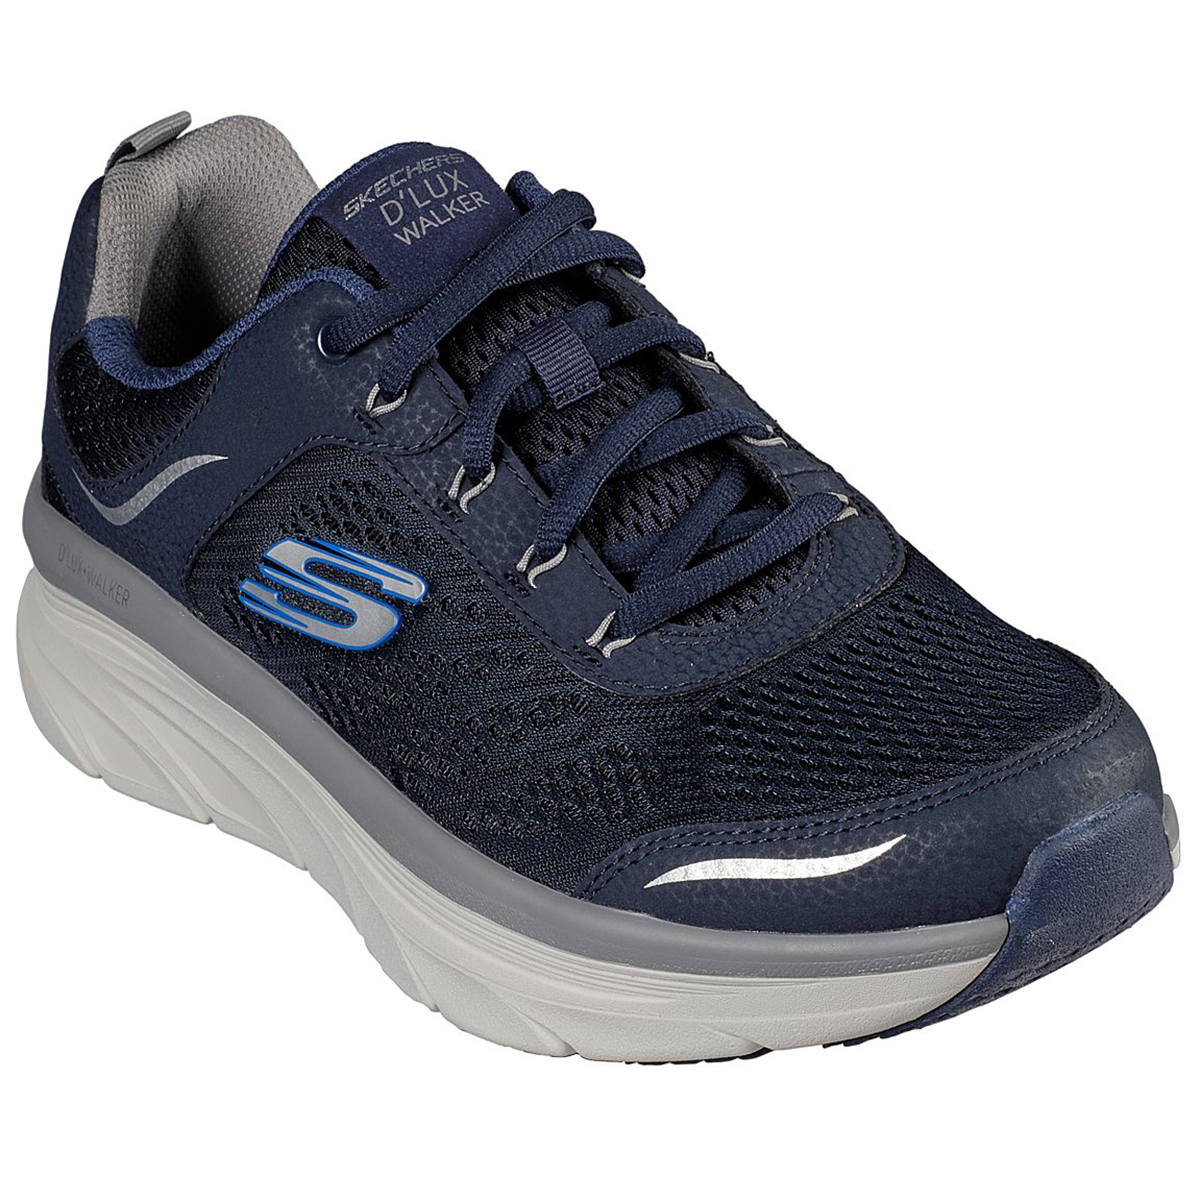 Skechers Men's Relaxed Fit D'lux Walking Shoes - Blue, 8.5